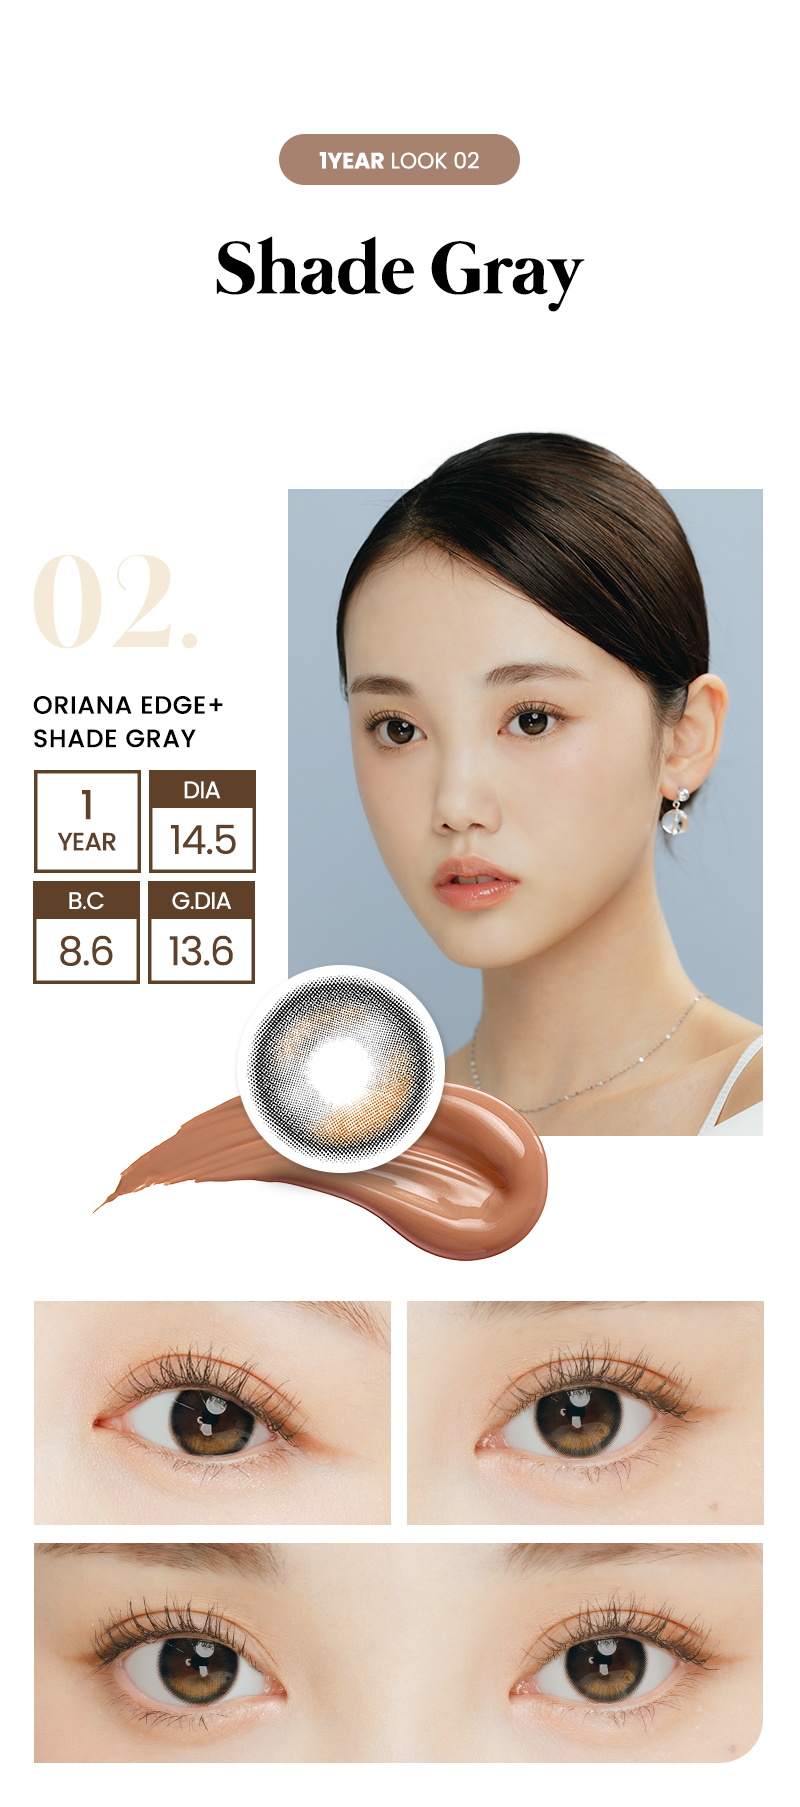 oriana-edge-plus shade gray